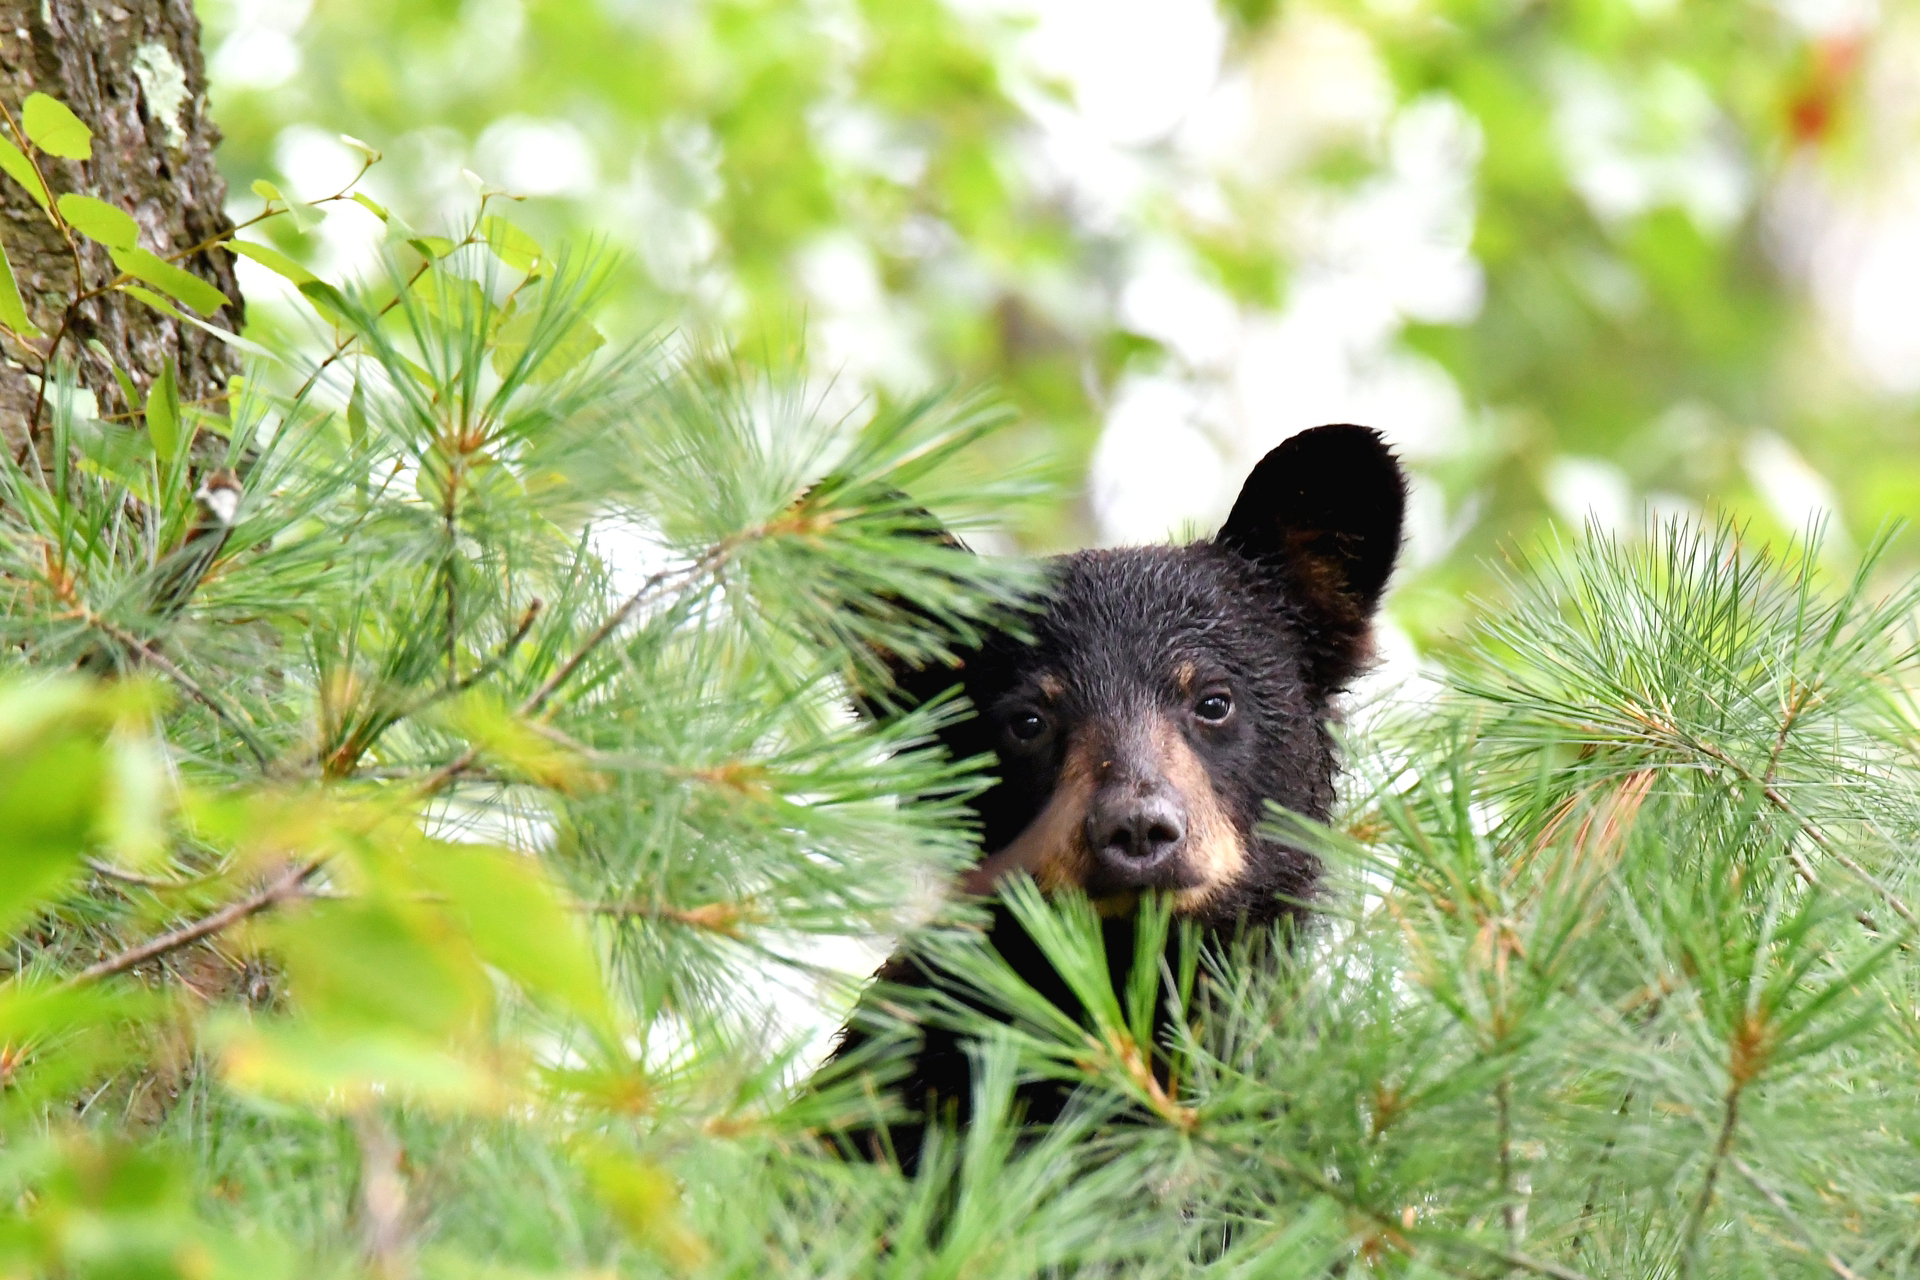 A black bear cub peaking through pine needles in a tree.